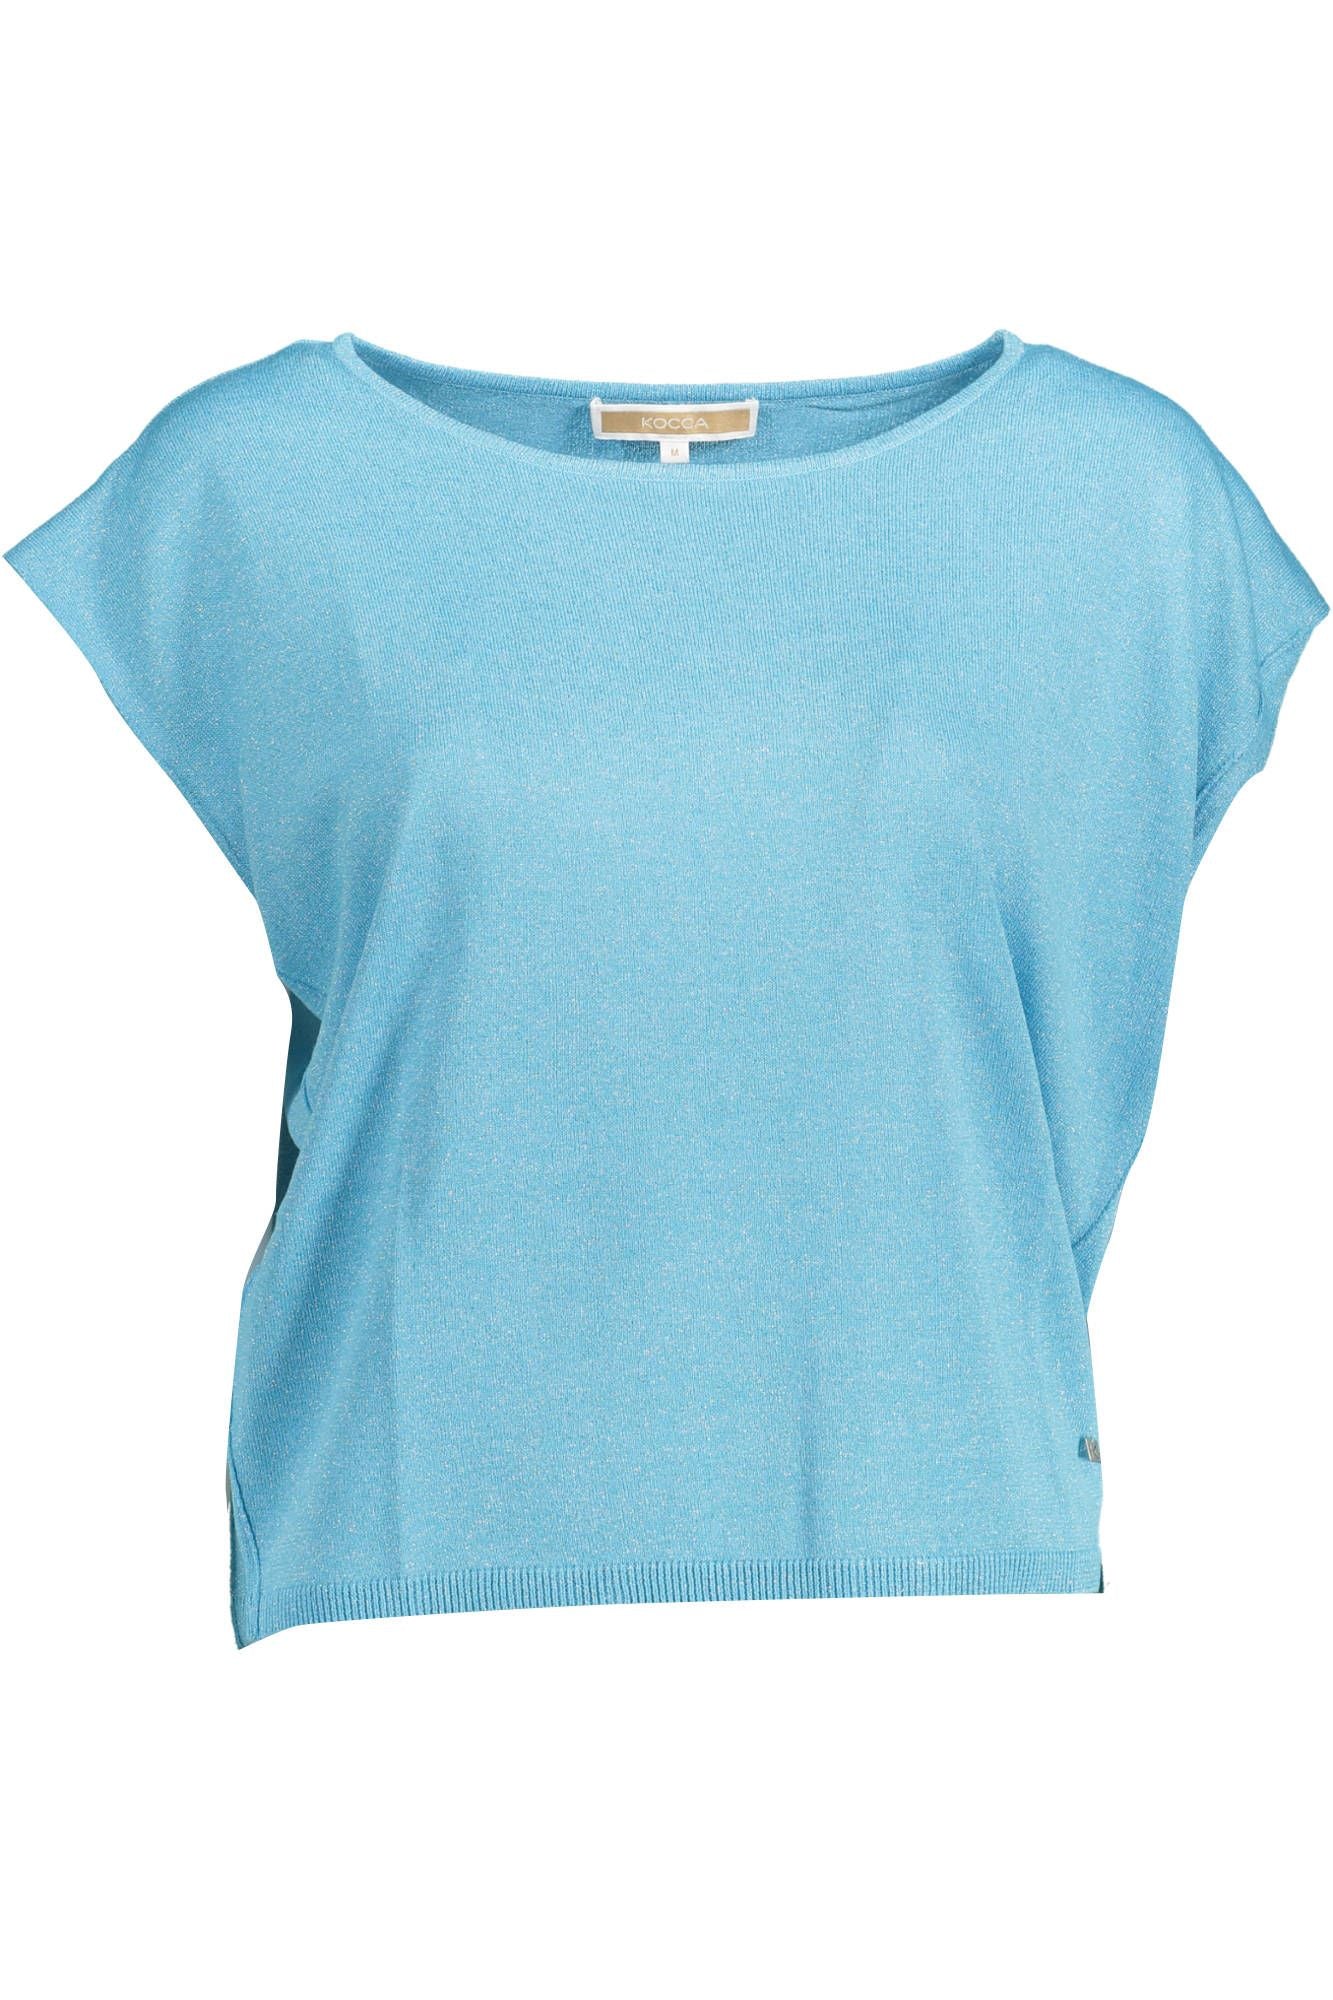 Kocca Light Blue Polyester Tops & T-Shirt